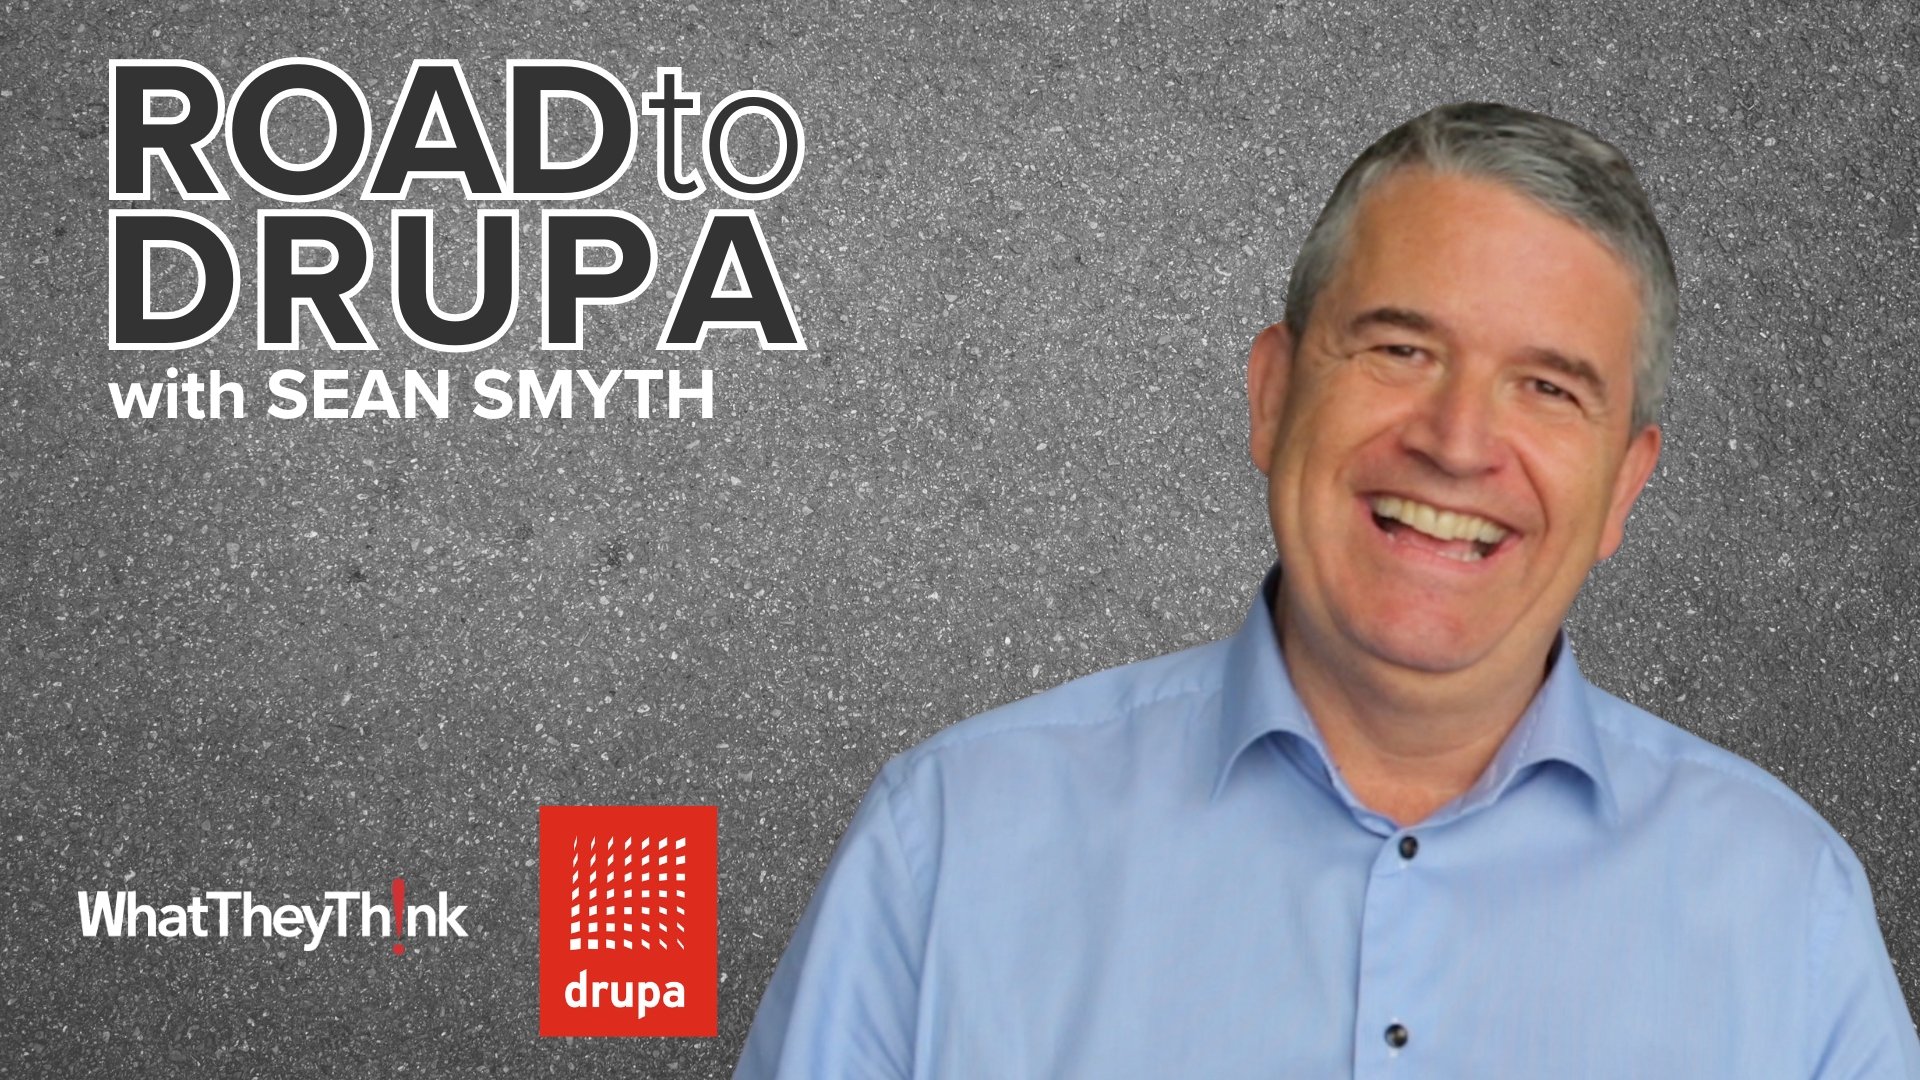 Road to drupa: Sean Smyth